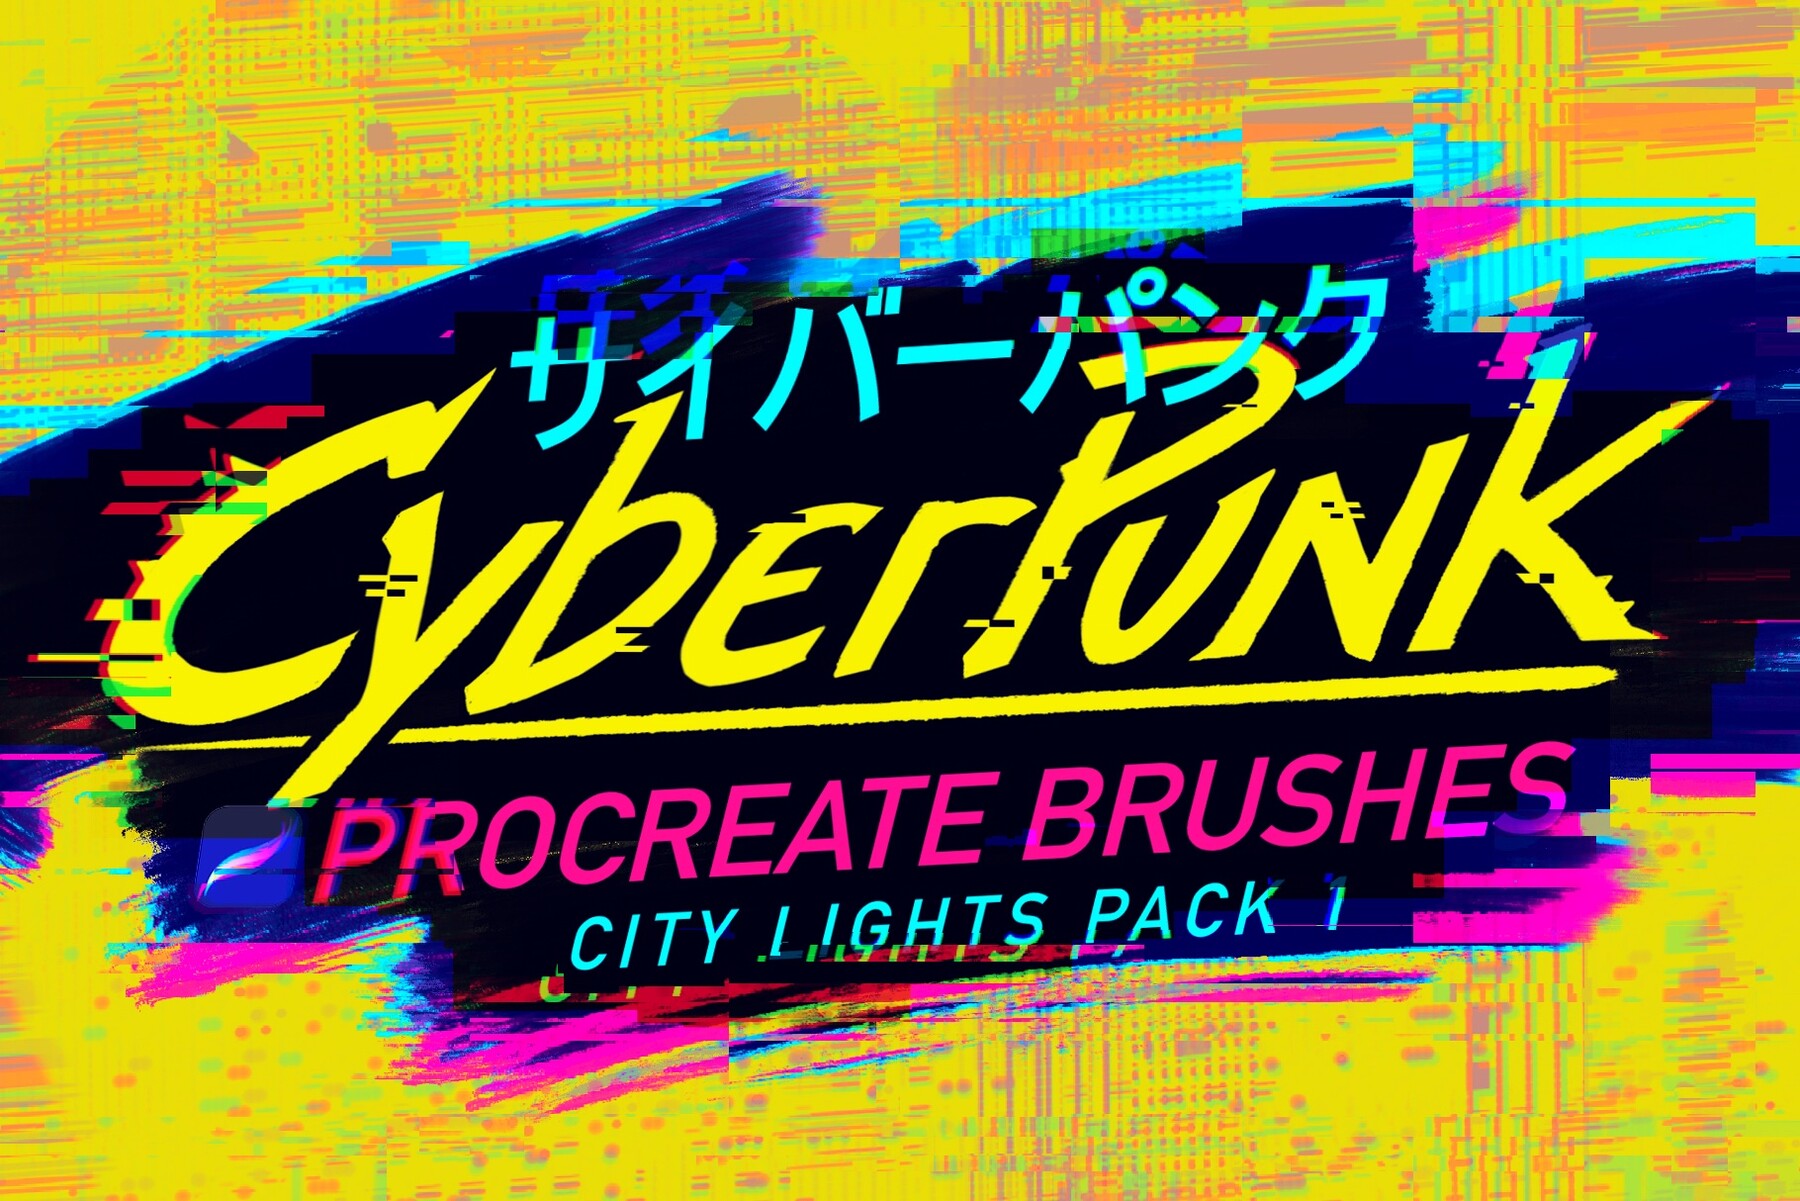 cyberpunk brushes procreate free